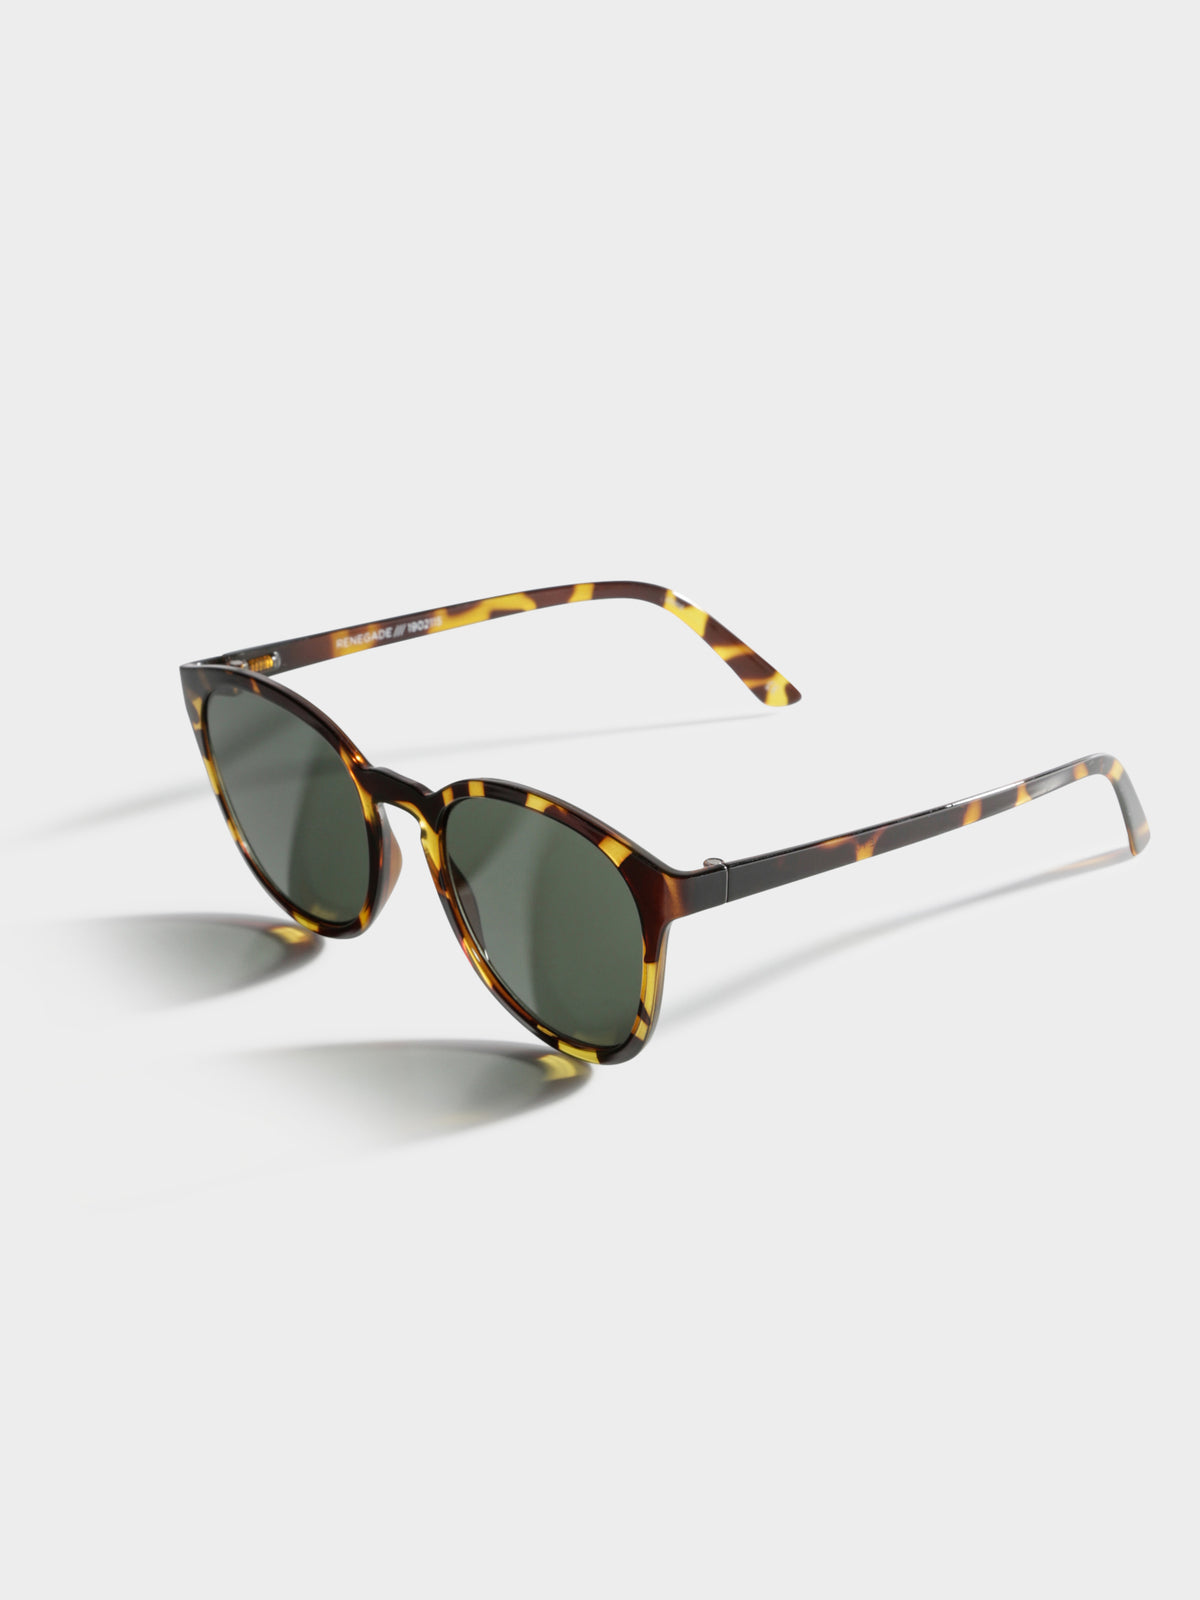 Renegade Sunglasses in Syrup Tortoiseshell